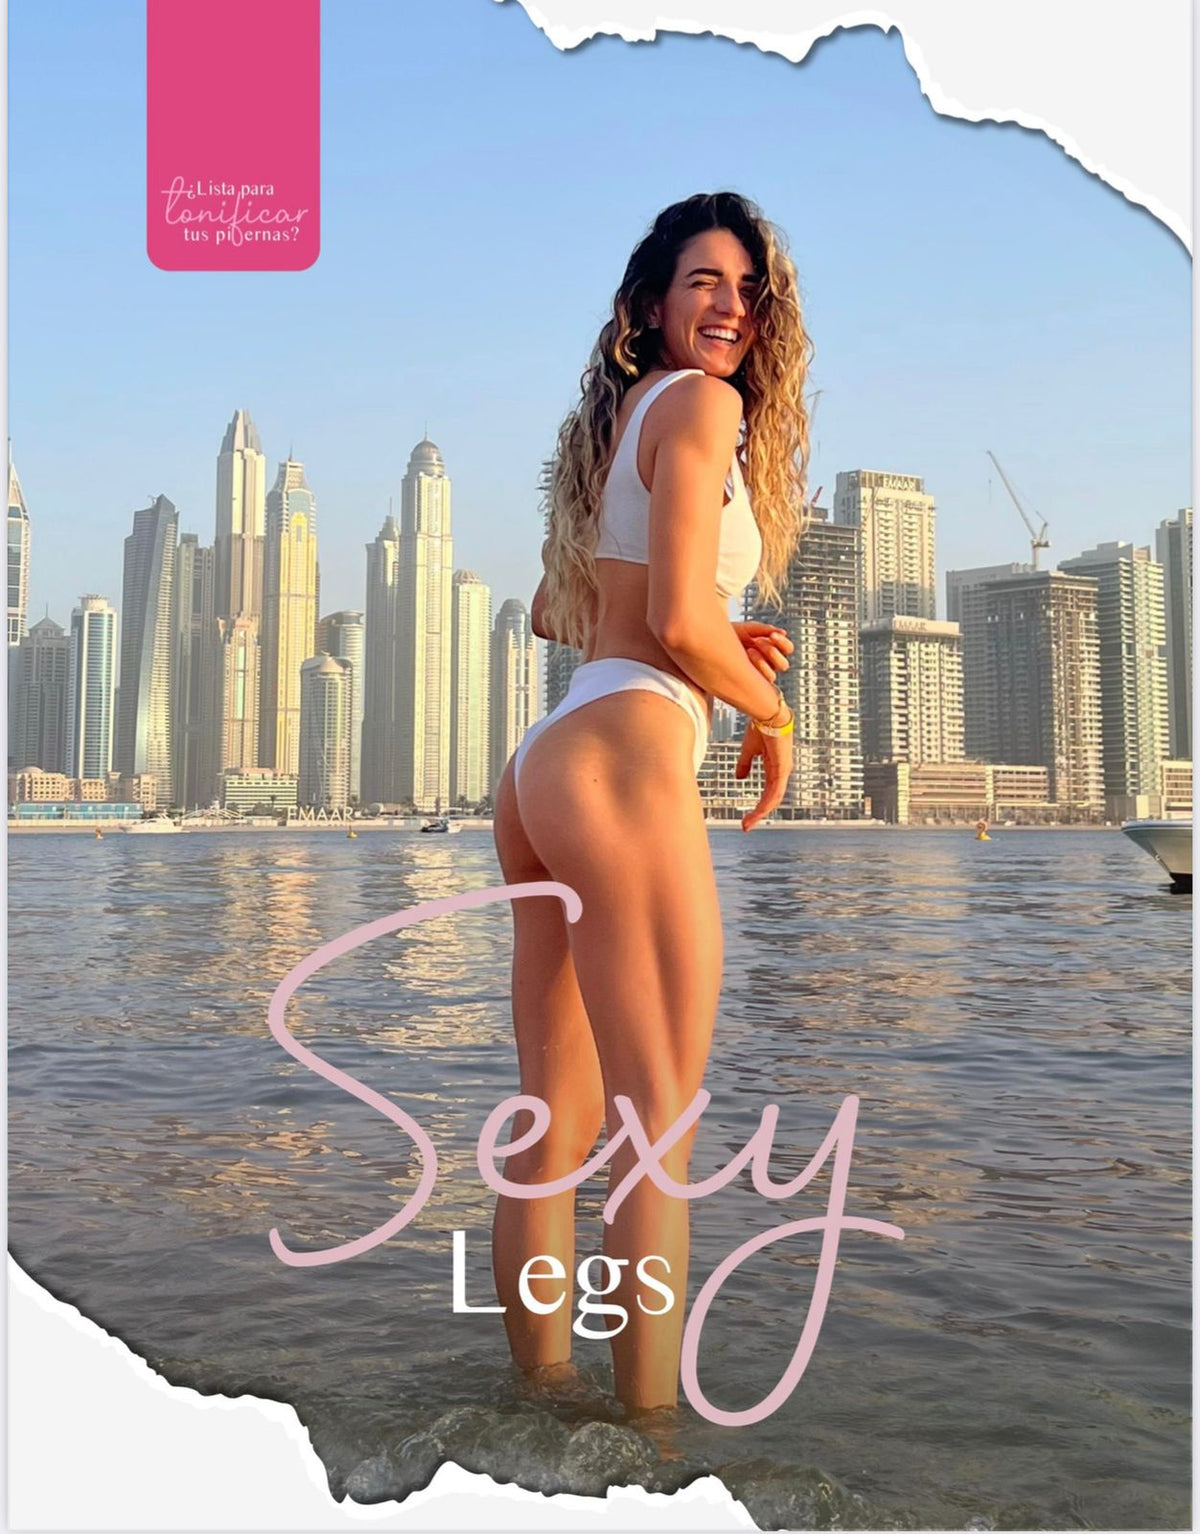 Programa Sexy legs